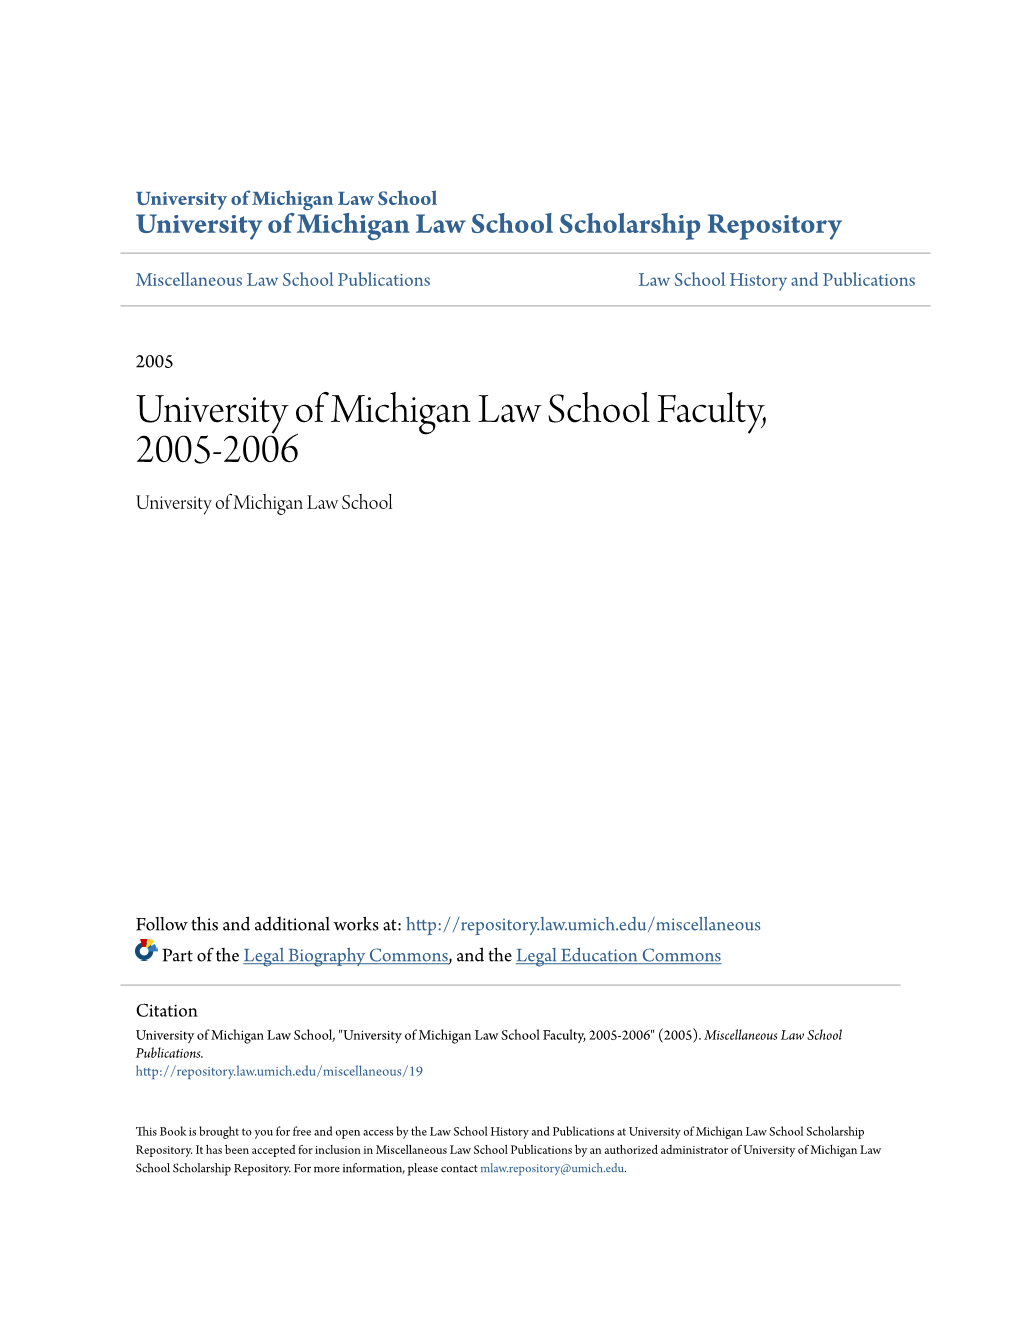 University of Michigan Law School Faculty, 2005-2006 University of Michigan Law School